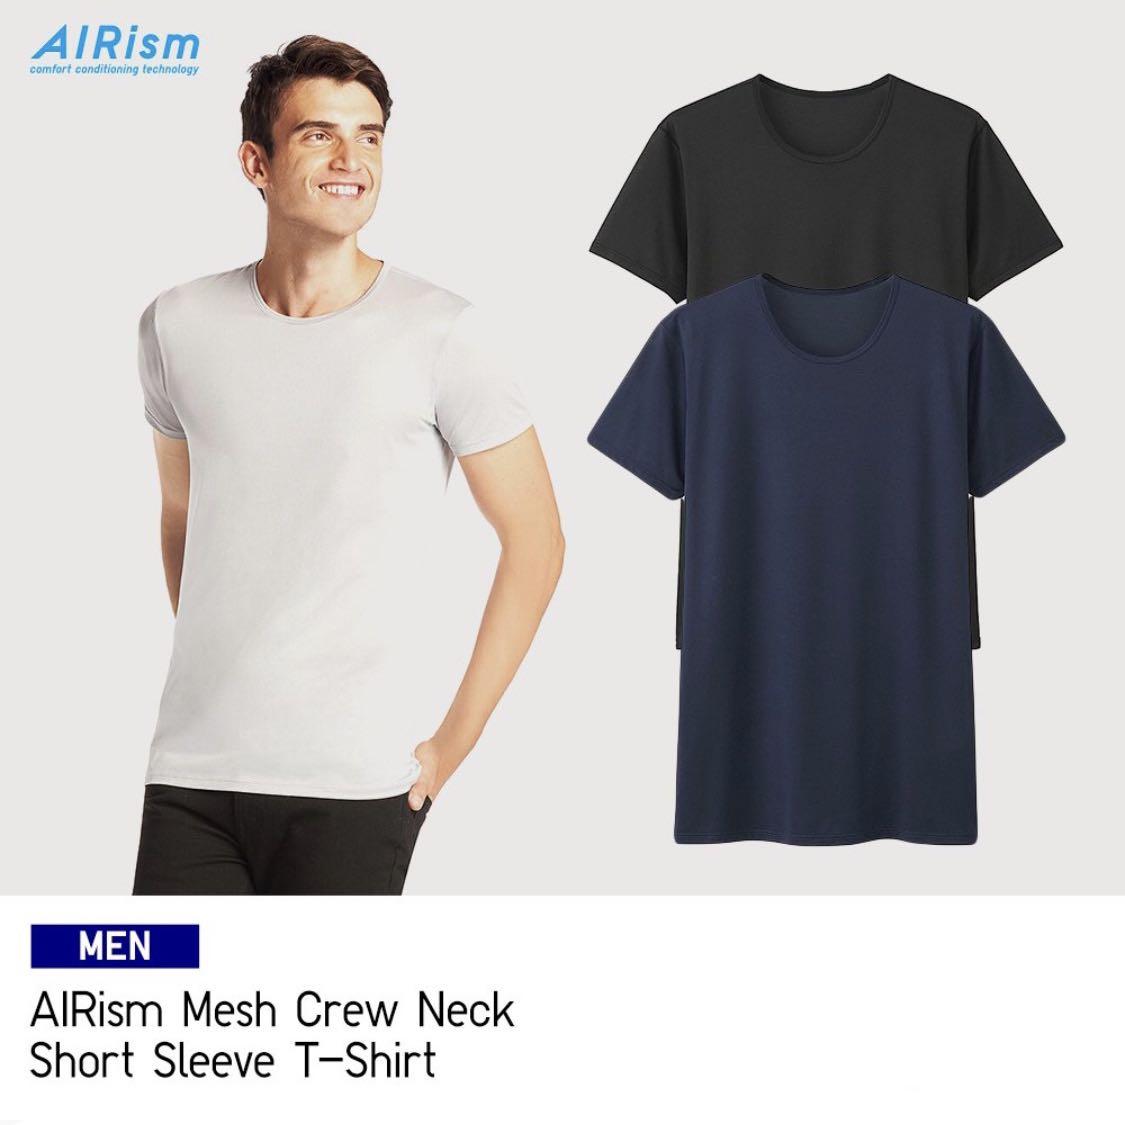 Uniqlo Airism Mesh Undershirt Review - The Undershirt Guy